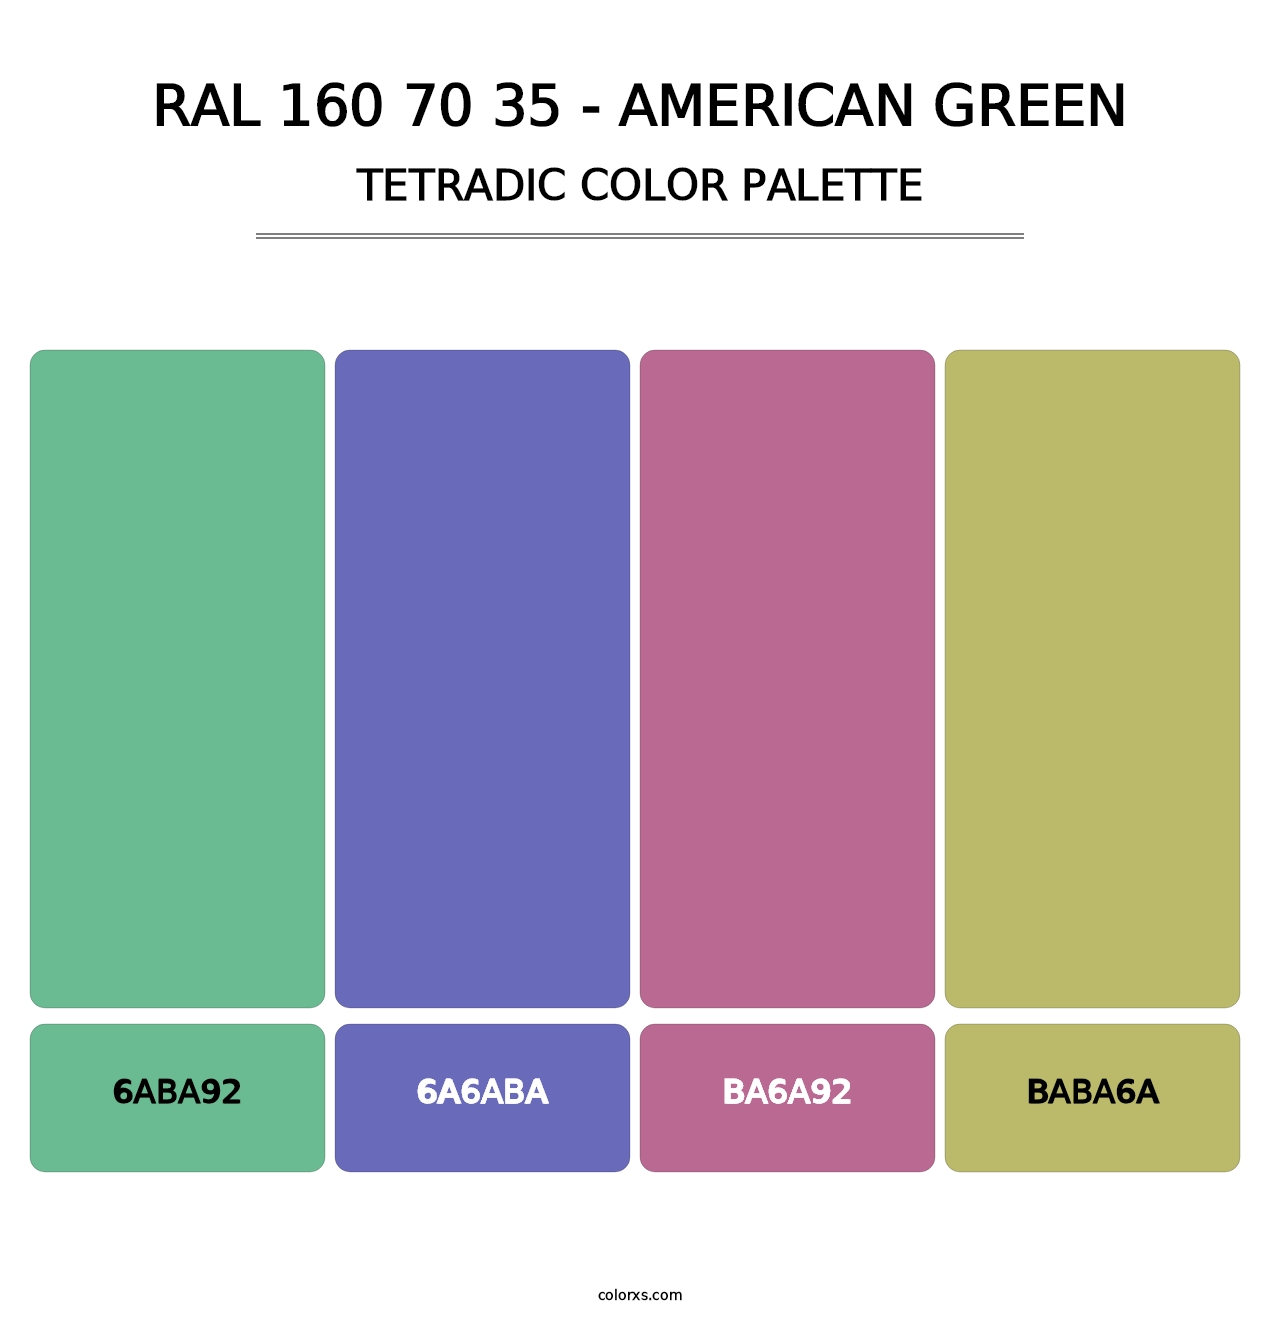 RAL 160 70 35 - American Green - Tetradic Color Palette